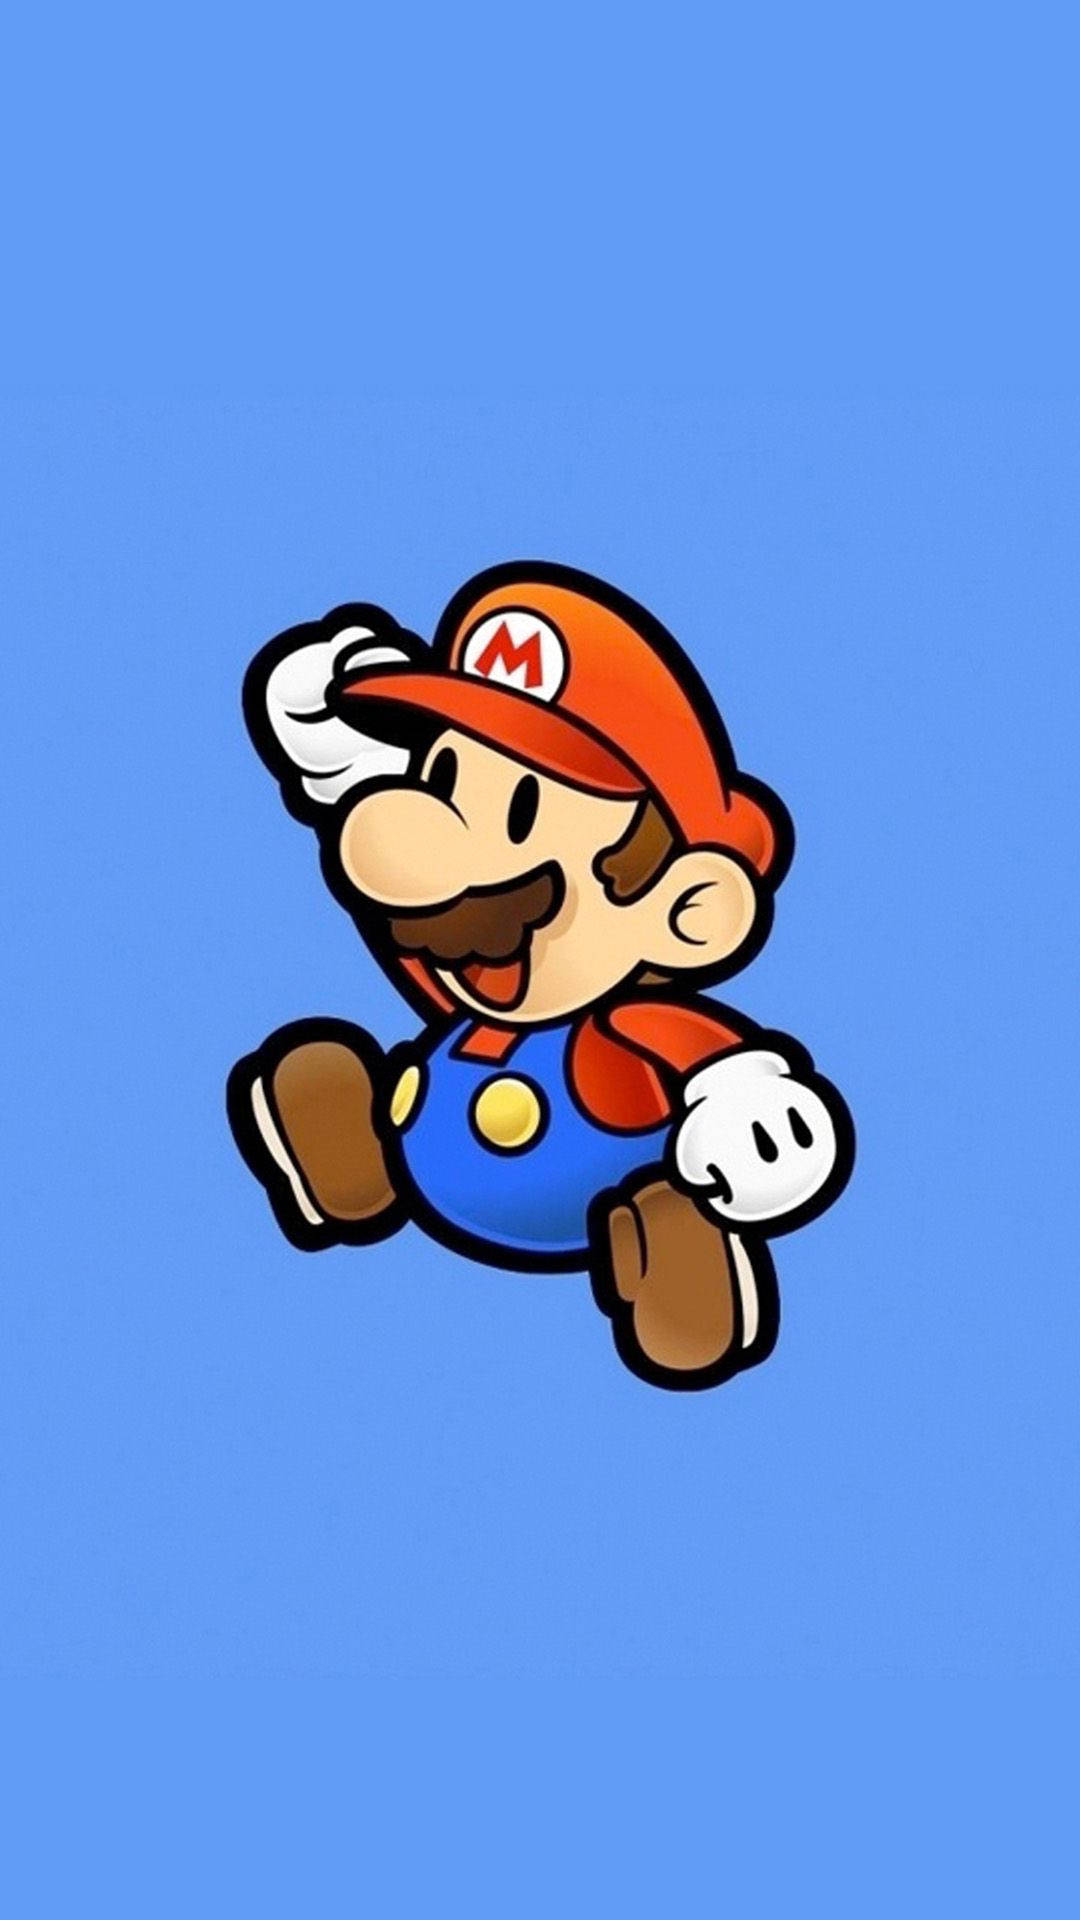 Super Mario On Blue Background